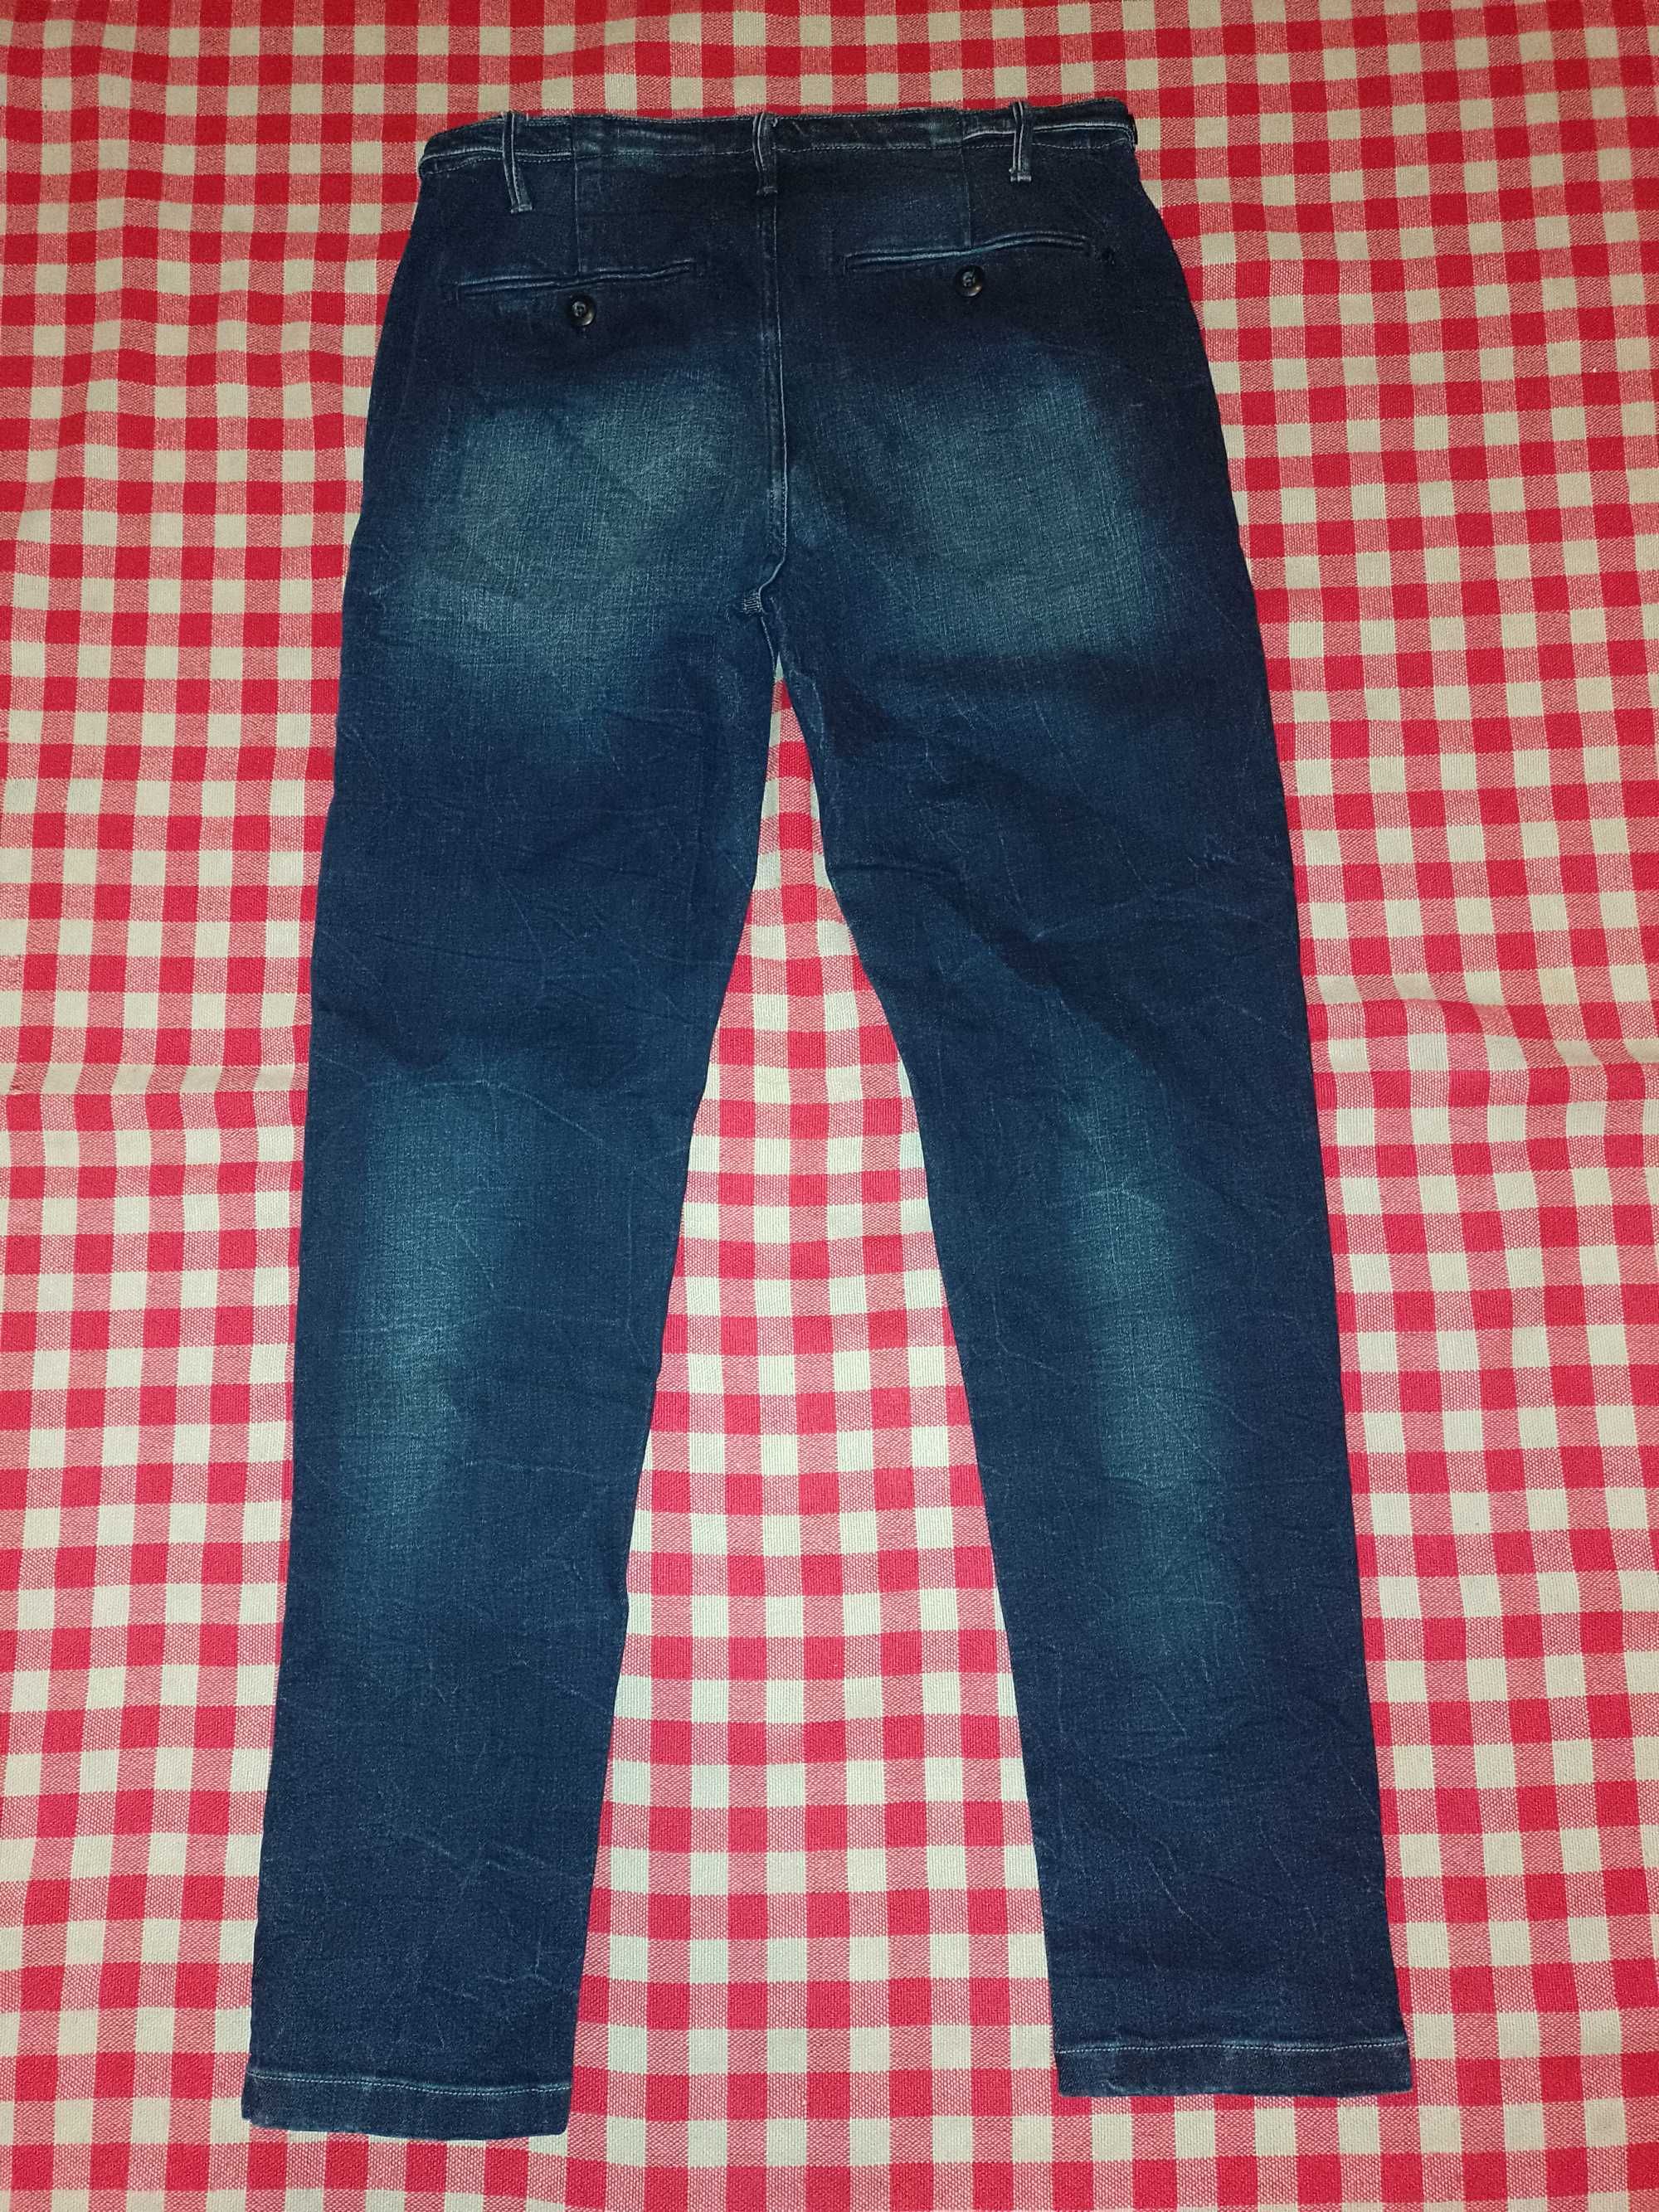 Spodnie męskie jeans Replay rozmiar S